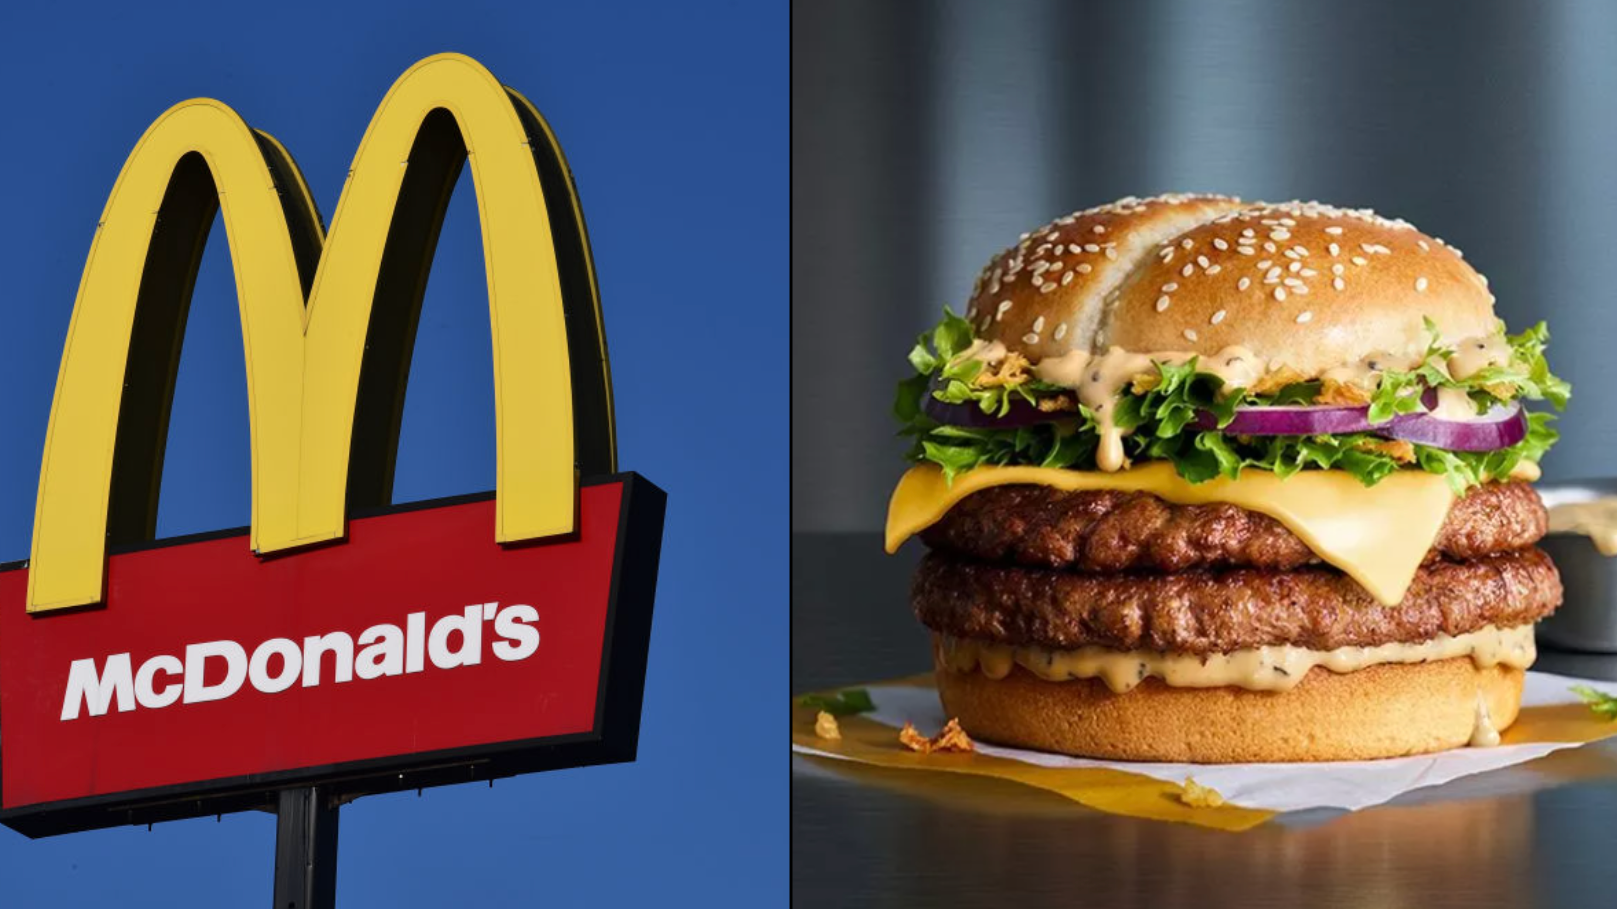 McDonald's launch delicious new Tim Tam McFlurry - Food Files 